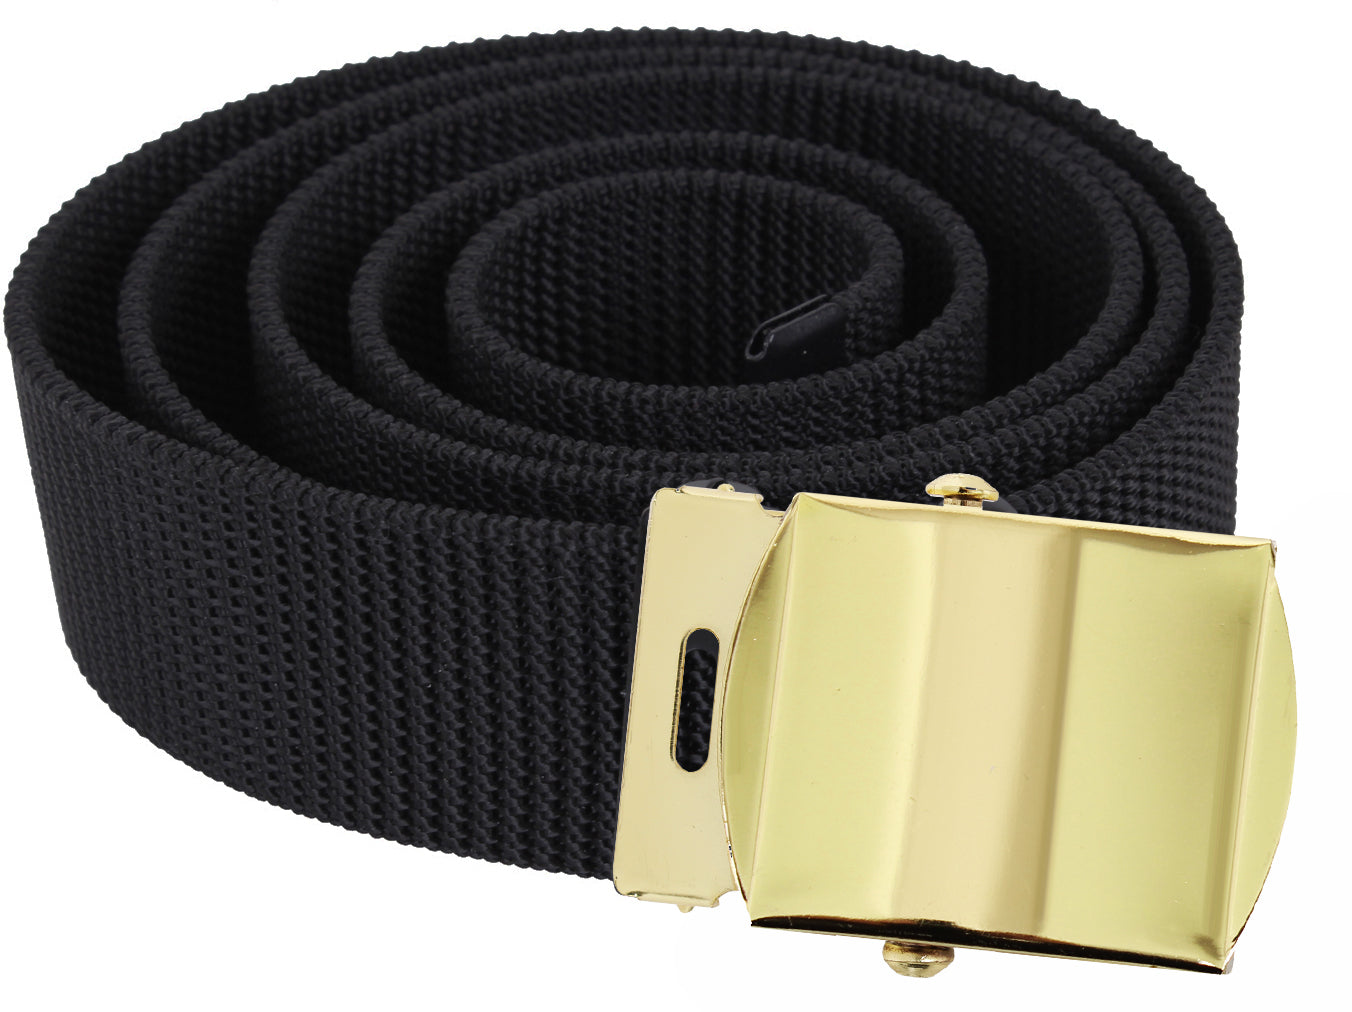 Black Webbing Nylon Web Belt With Gold Buckle